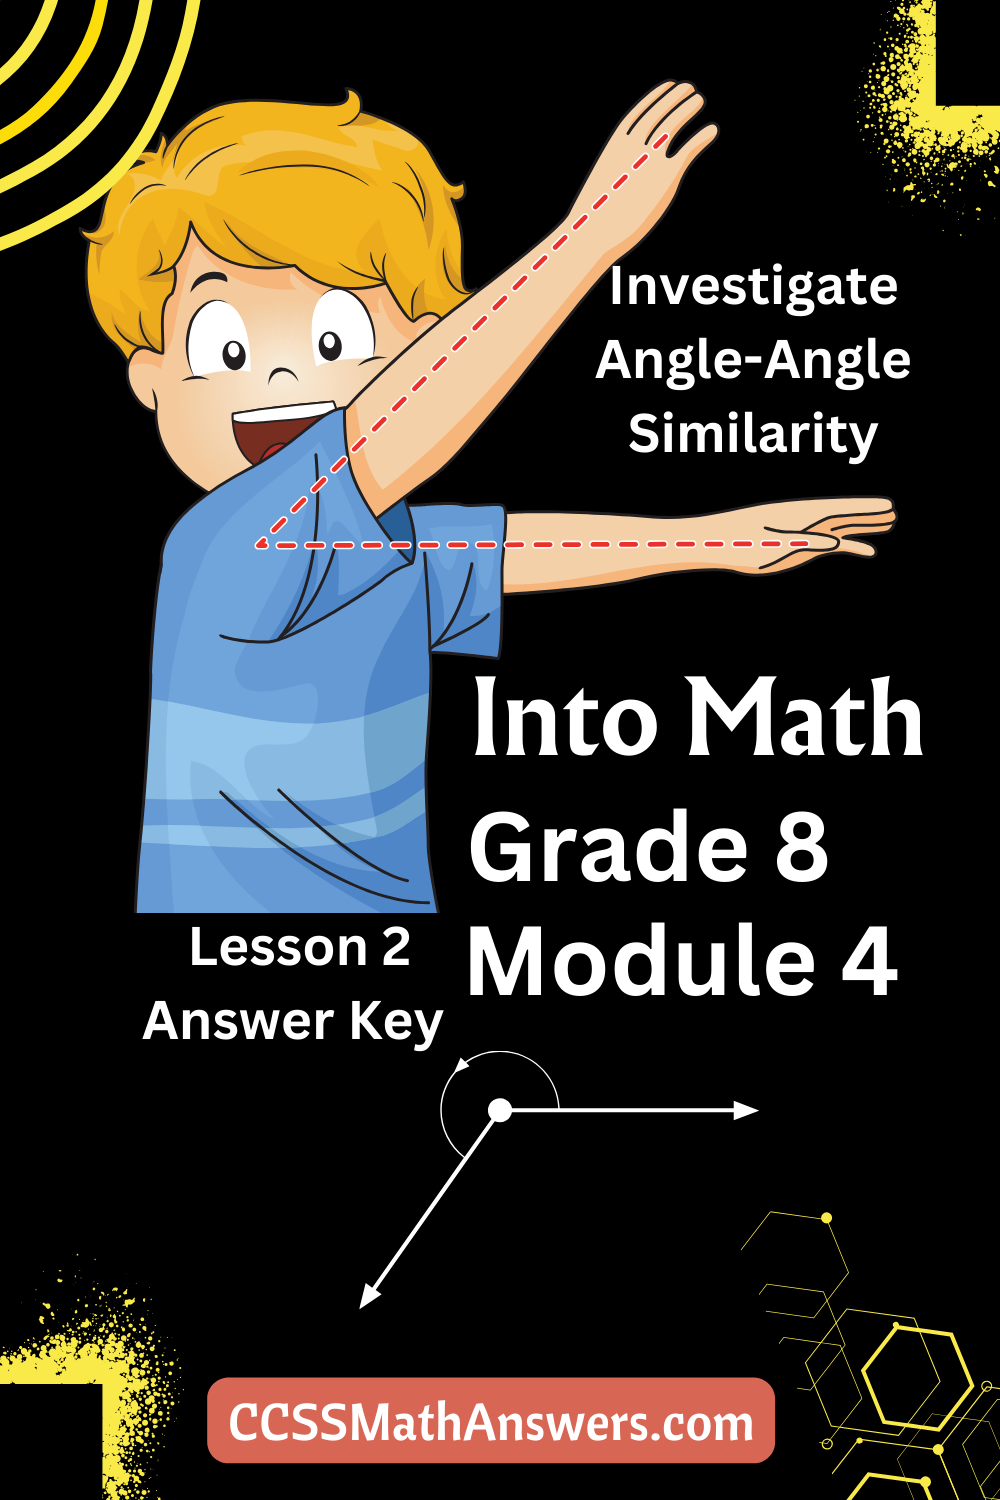 Into Math Grade 8 Module 4 Lesson 2 Answer Key Investigate Angle-Angle Similarity